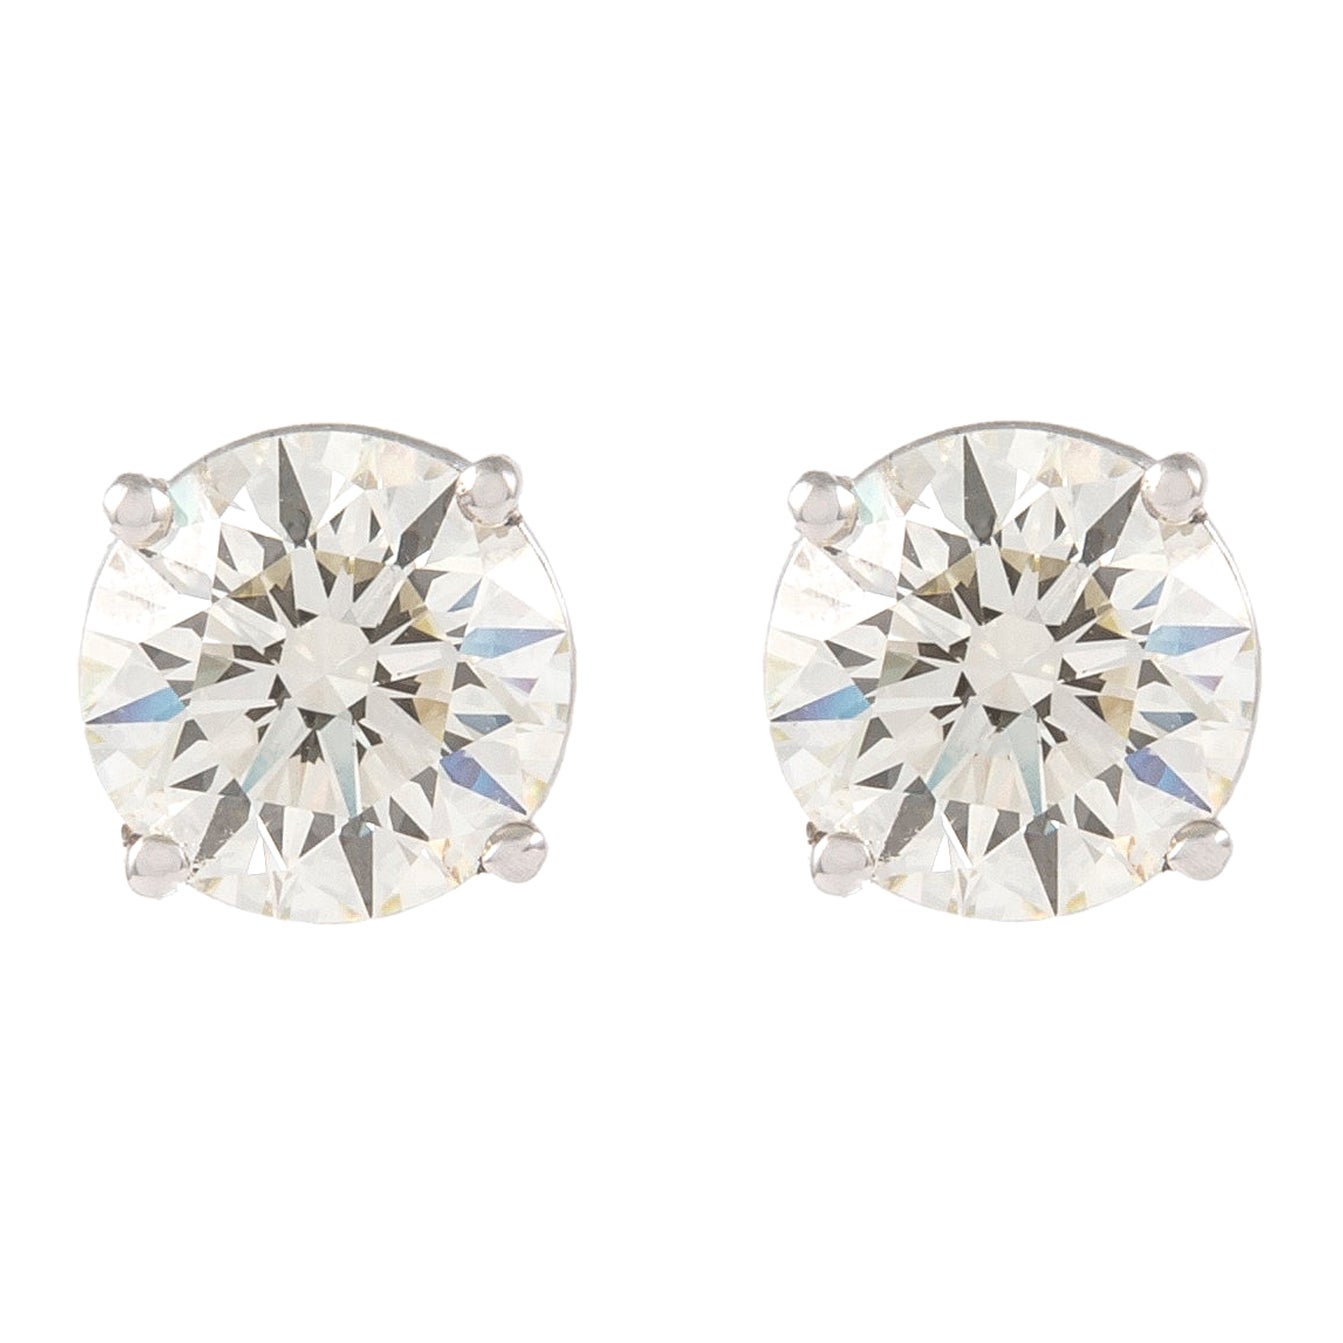 Alexander EGL Certified 2.54 Carat Diamond Stud Earrings 18k White Gold For Sale